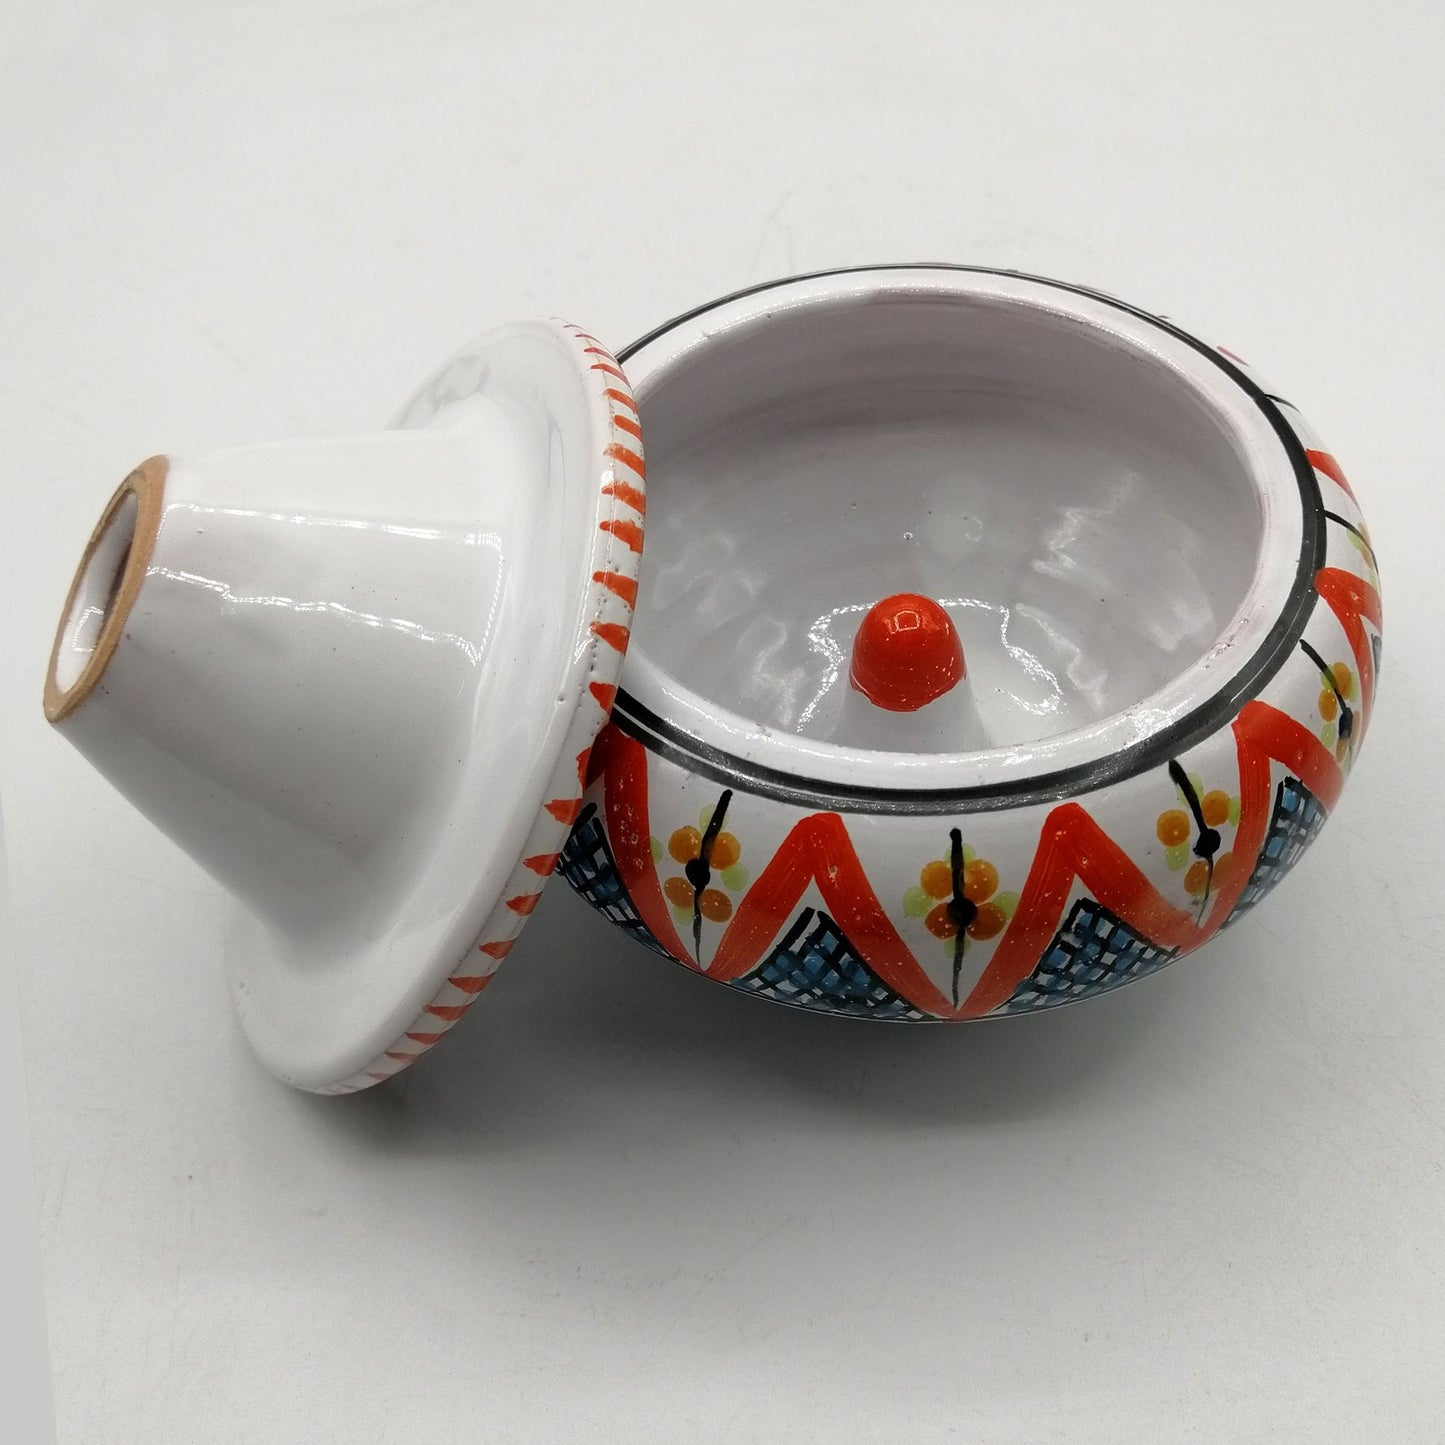 Etnico Arredo Posacenere Ceramica Antiodore Tunisina Marocchina 1211201104